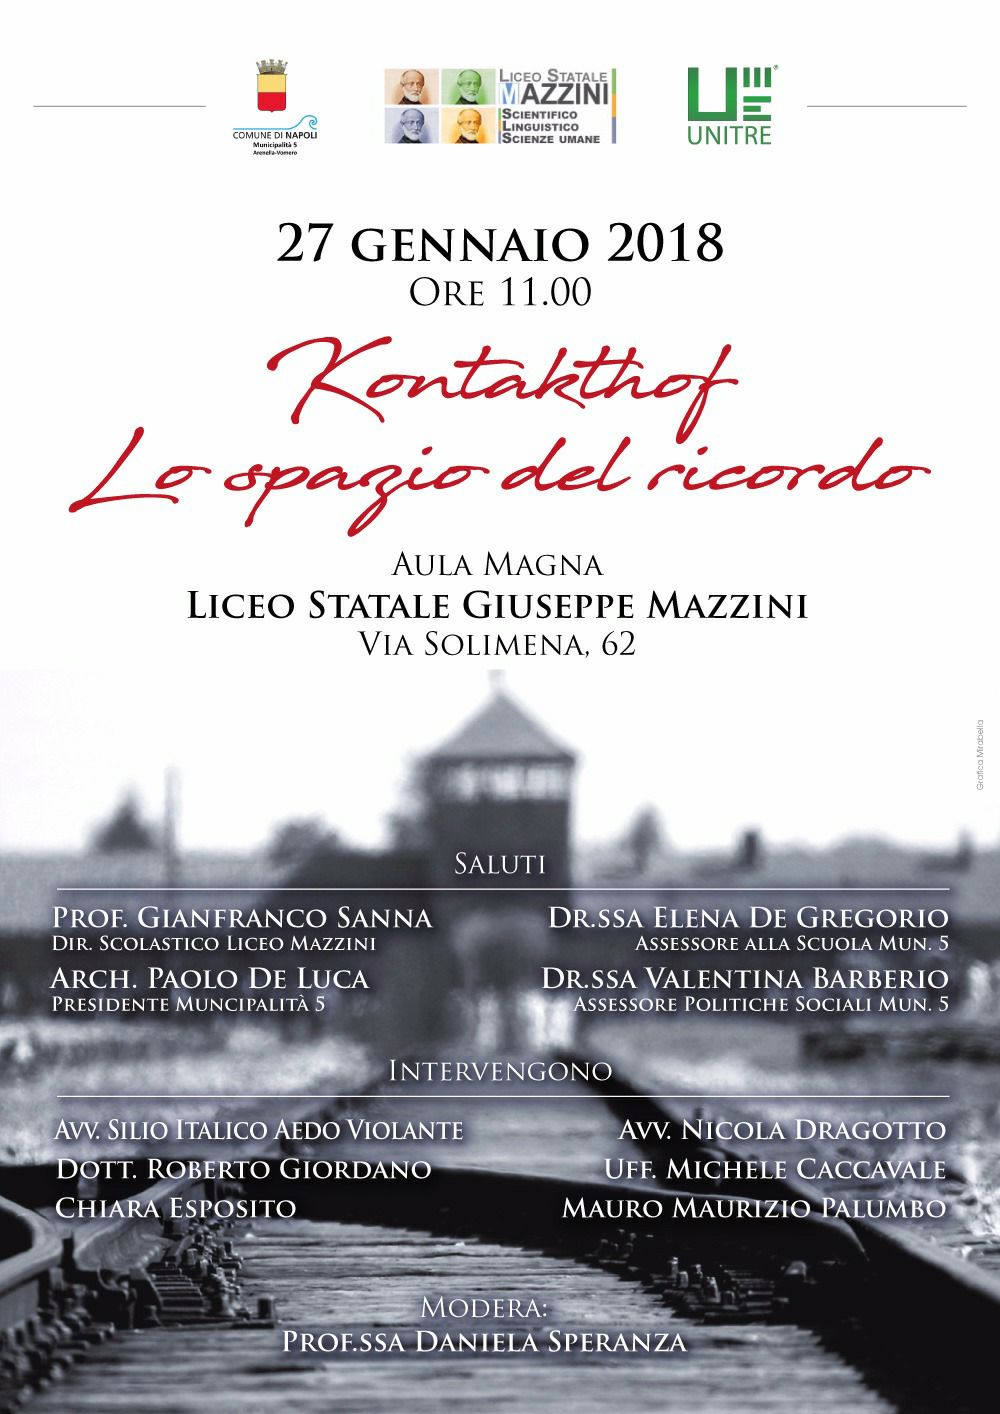 Napoli, 27 gennaio 2018: Liceo Giuseppe Mazzini